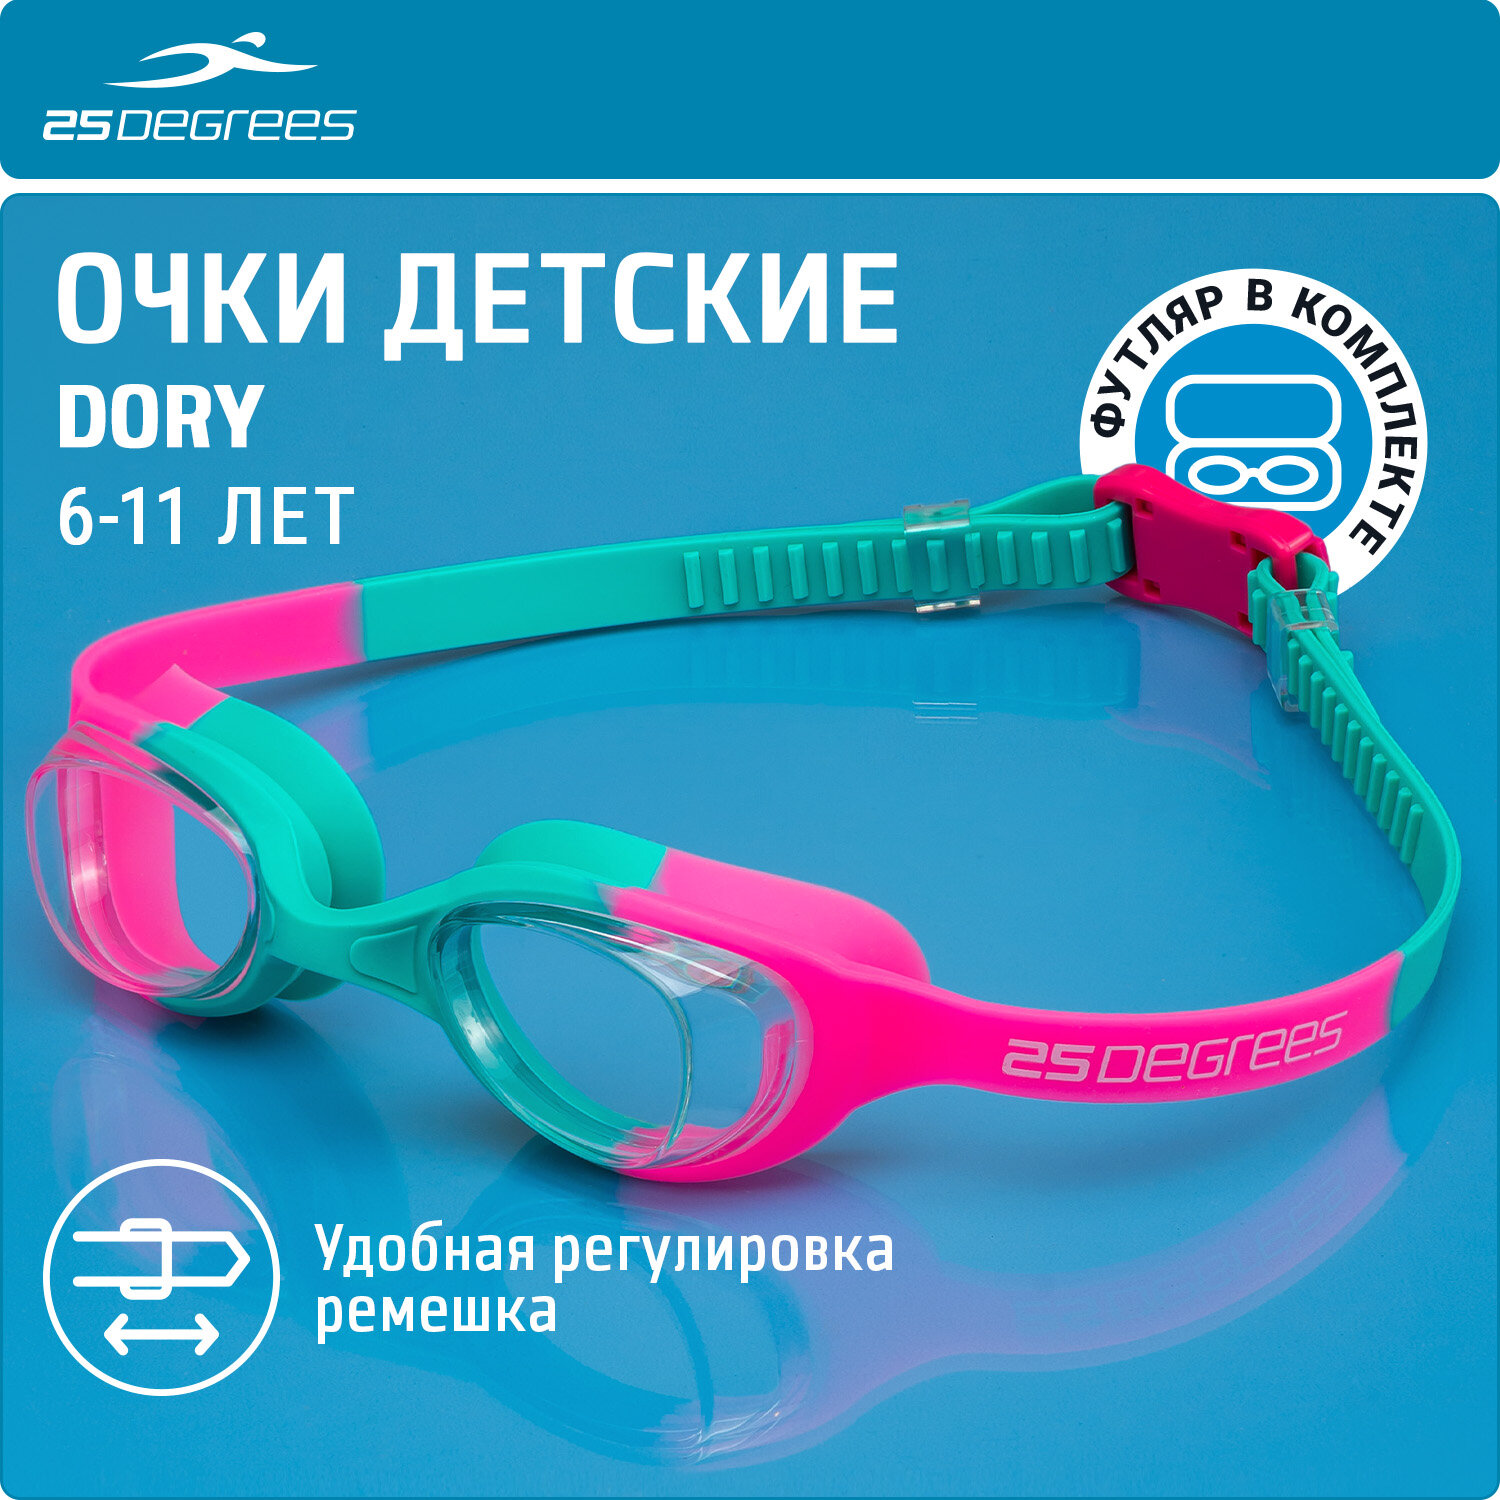 Очки для плавания детские 25DEGREES Dory Pink/Turquoise футляр в комплекте, цвет розовый/бирюзовый